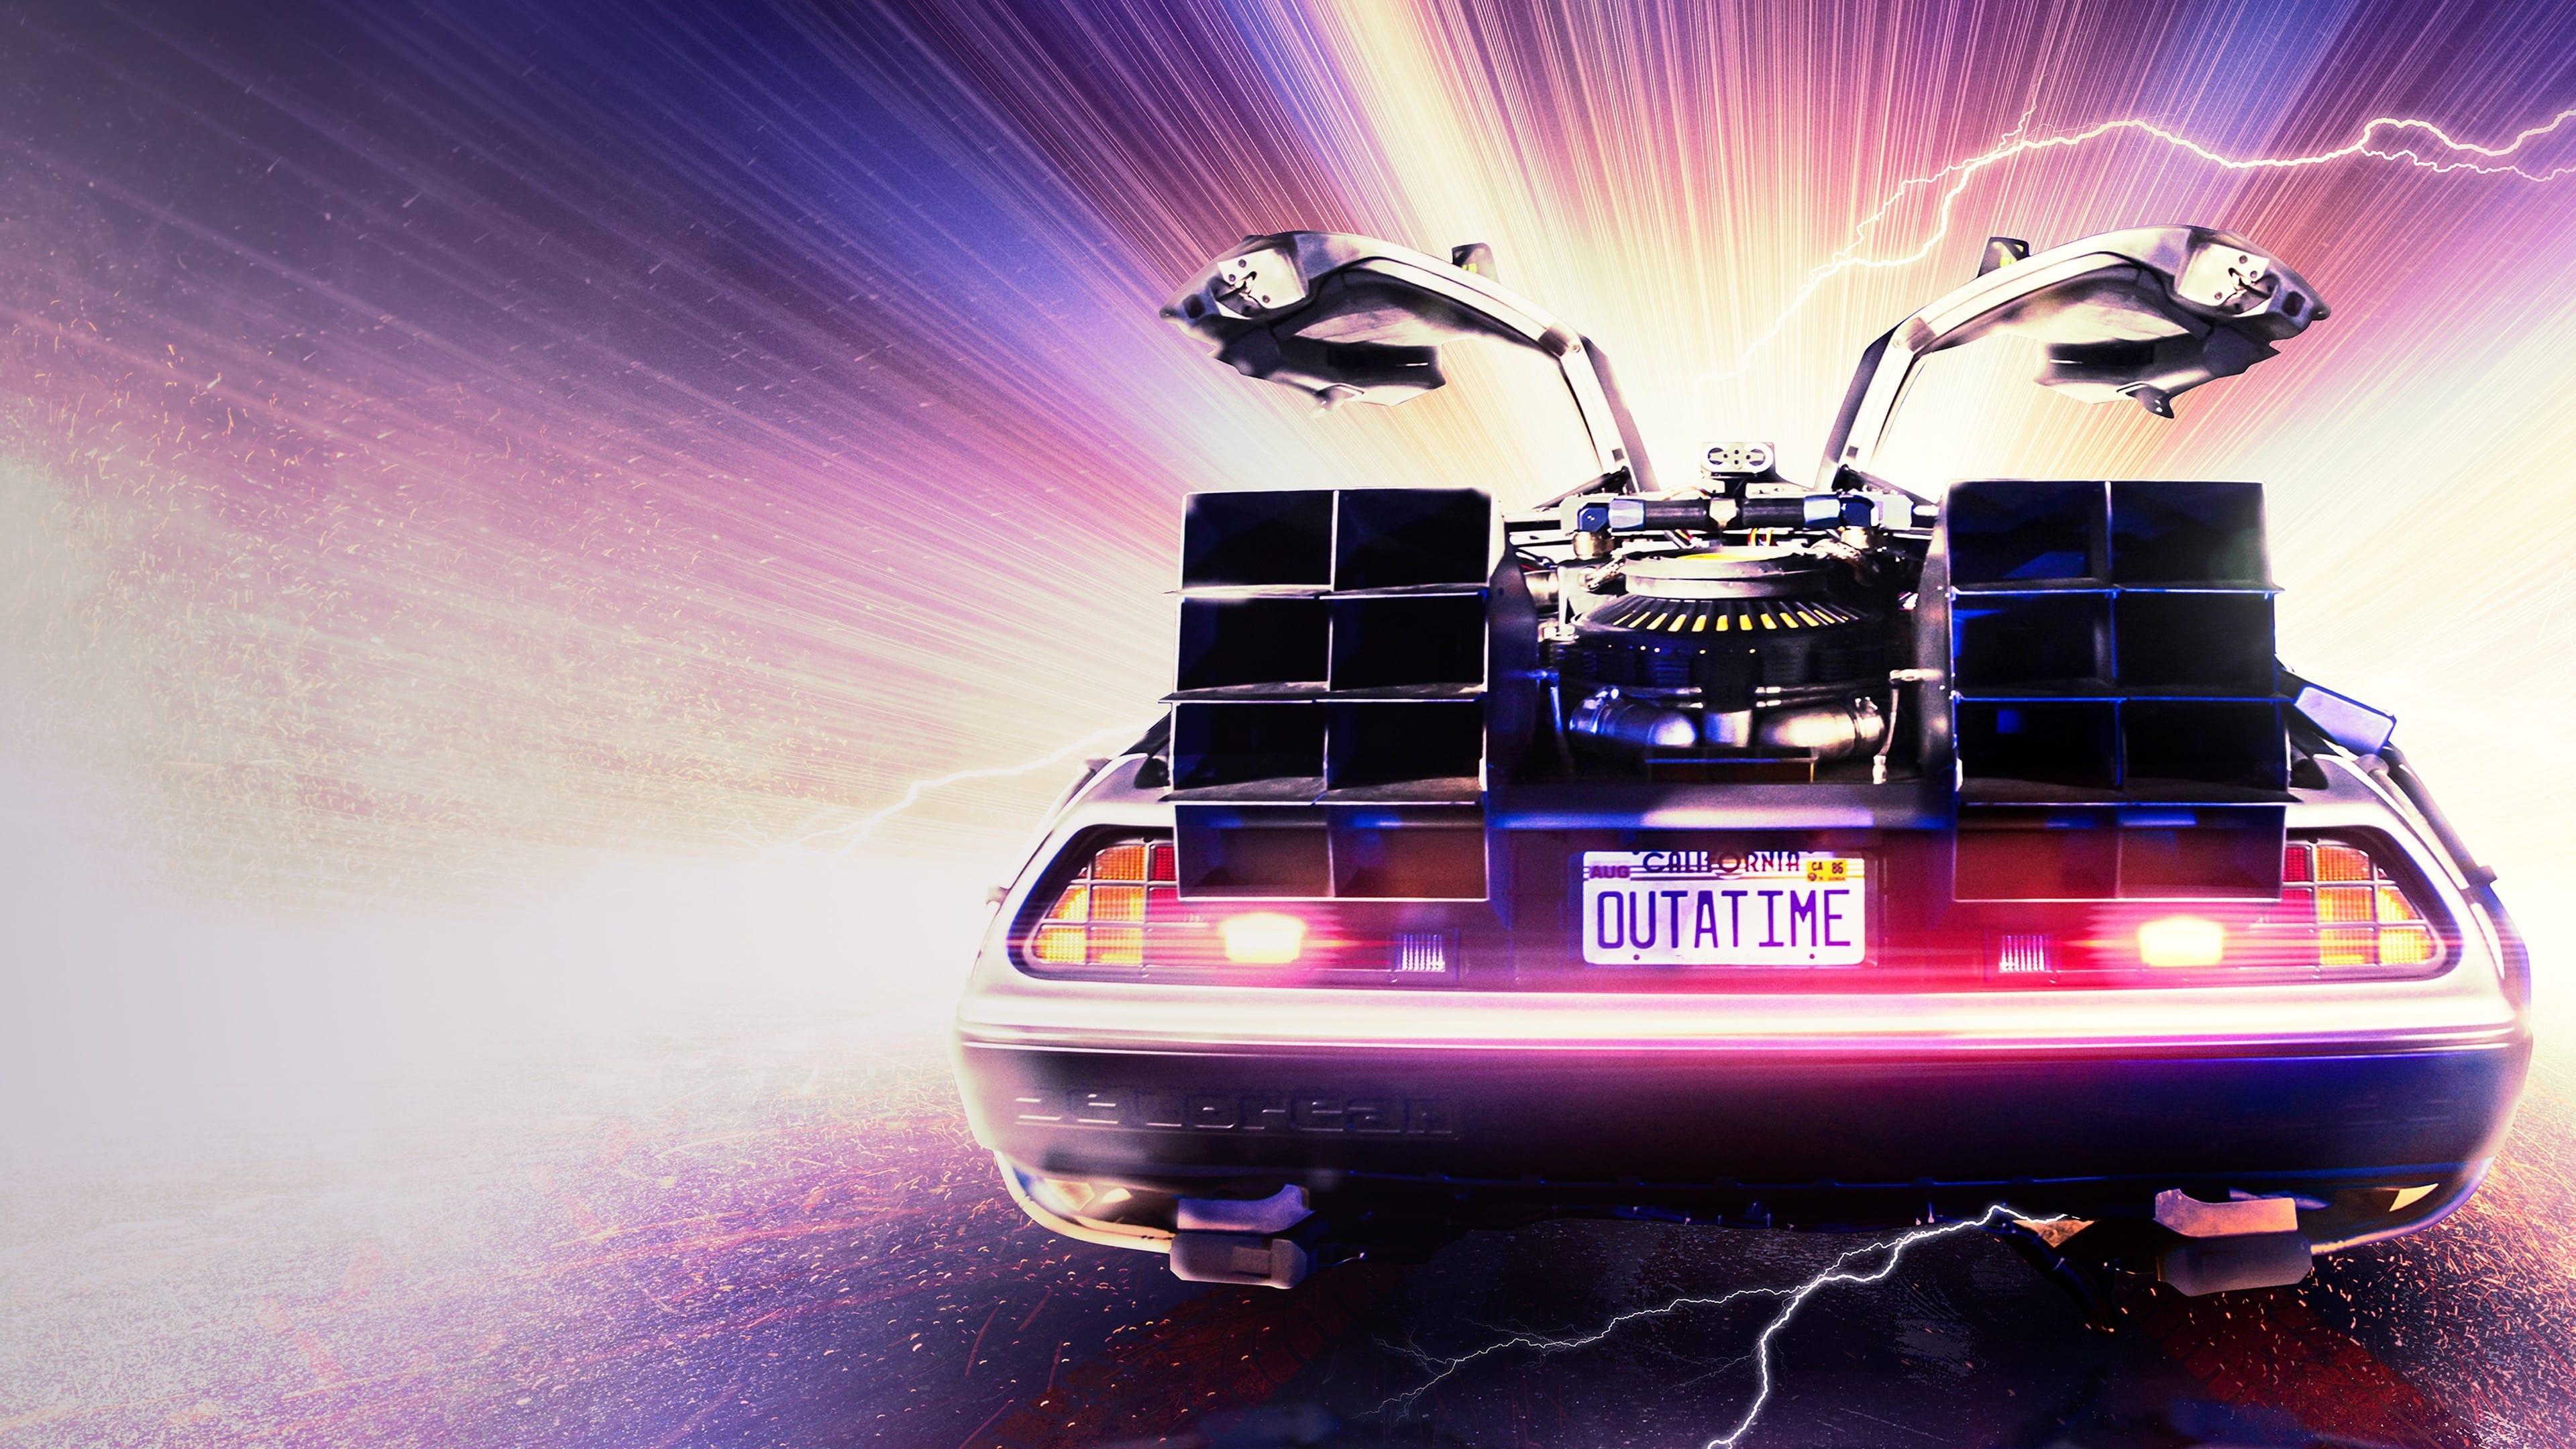 Outatime: Saving the DeLorean Time Machine backdrop